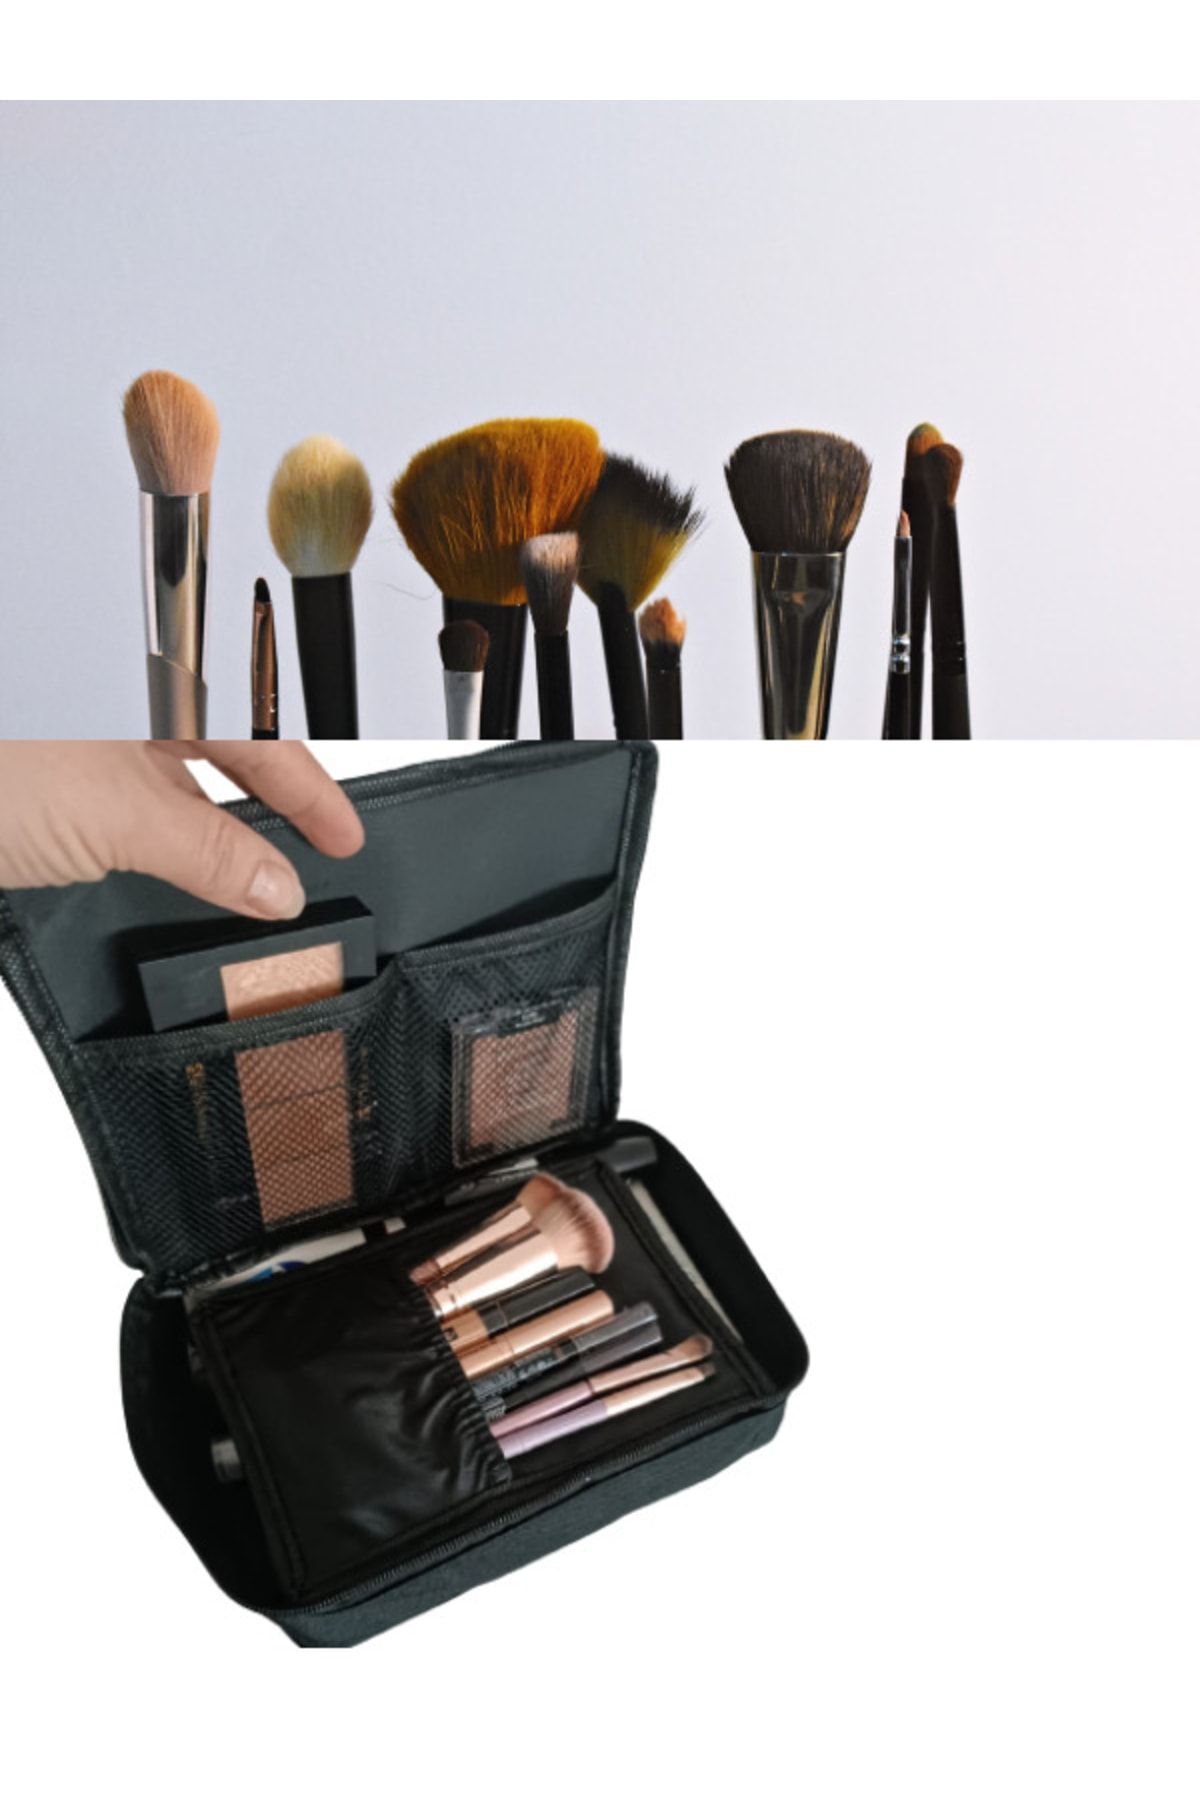 HOMELİFE EV TEKSTİL 4 Bölmeli Makyaj Çantası Kozmetik Makyaj Bavul Seti | Bakım Seyahat Makyaj Kozmetik Organizer Çanta